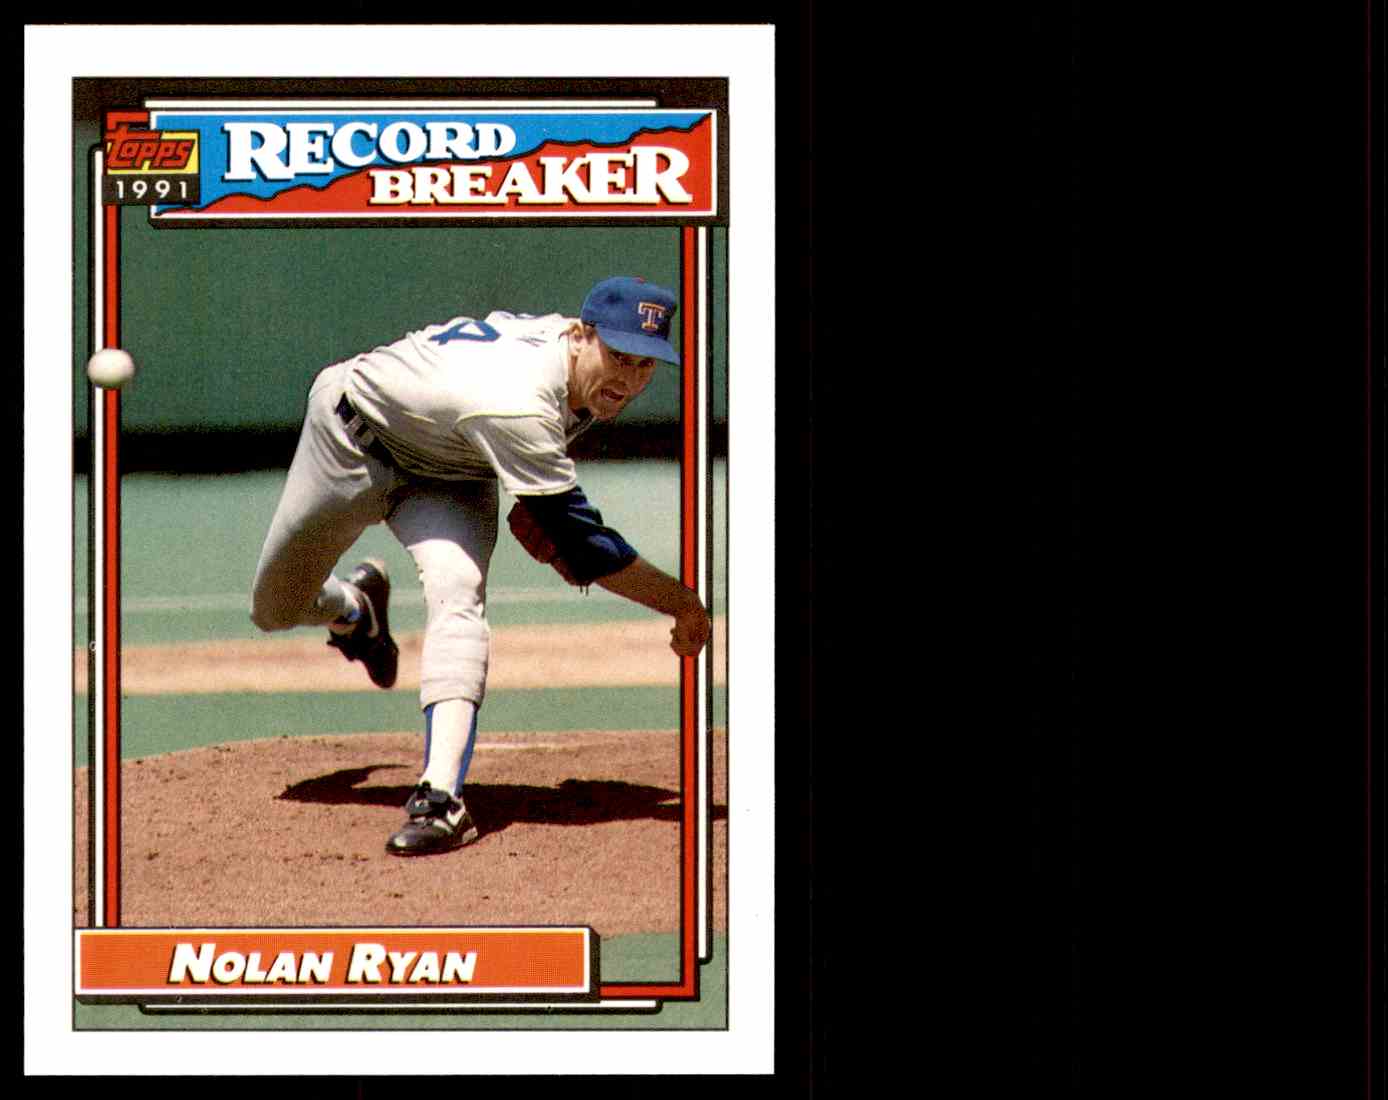 26 Nolan Ryan Record Breaker trading cards for sale